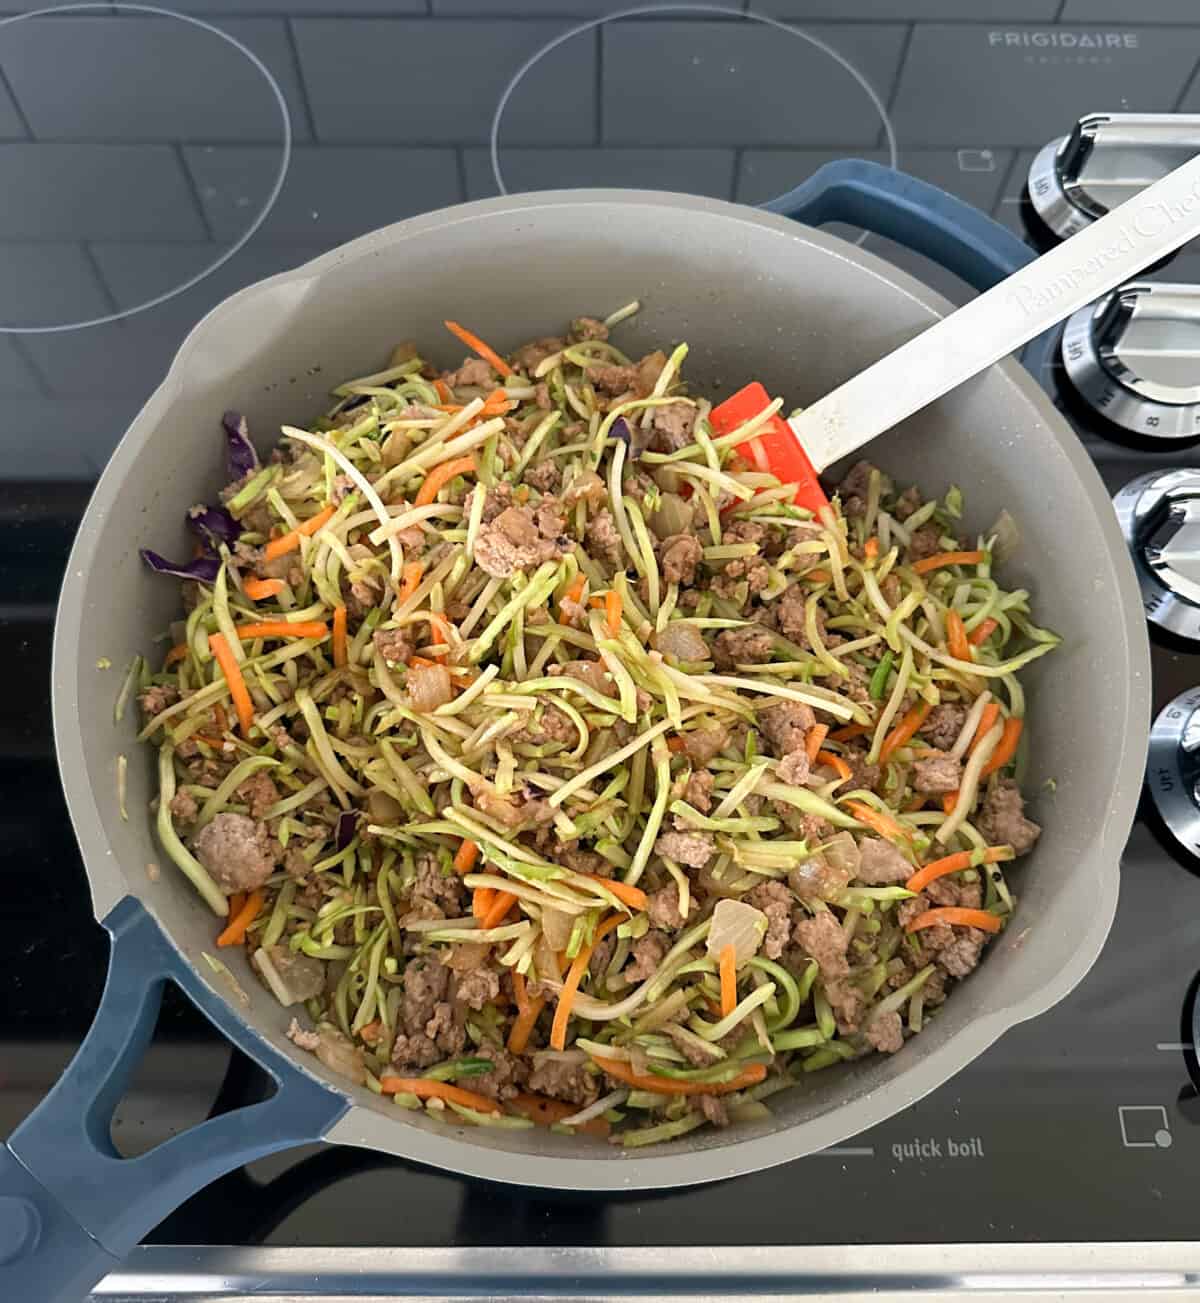 lettuce wrap filling in pan on stove